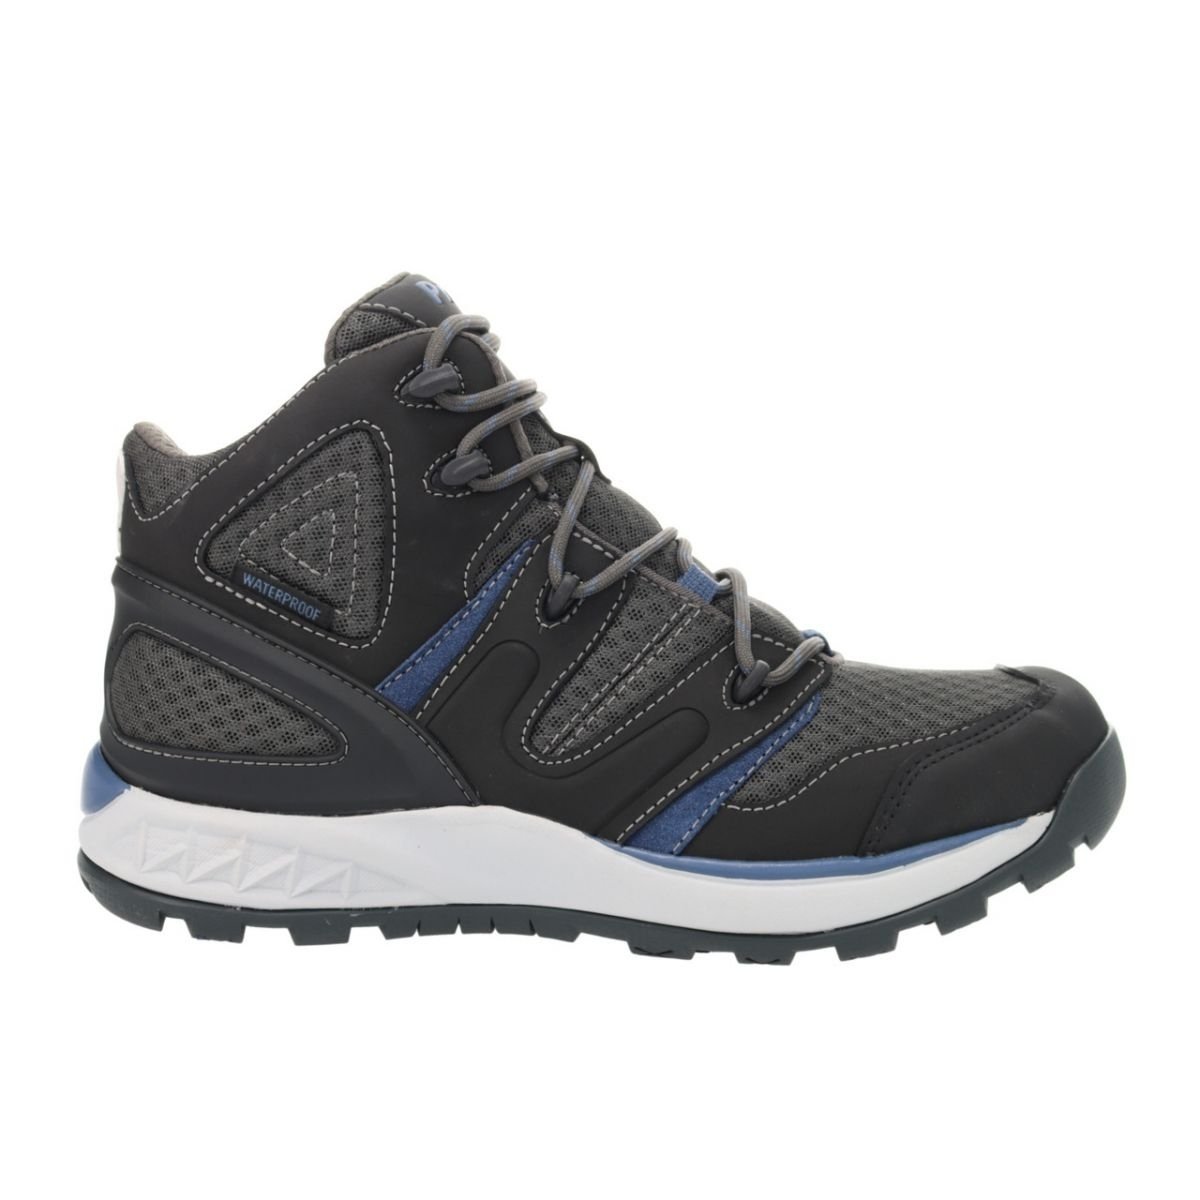 Propet Men's Veymont Waterproof Hiking Boot Grey/Blue - MOA022SGRB GREY/BLUE - GREY/BLUE, 14